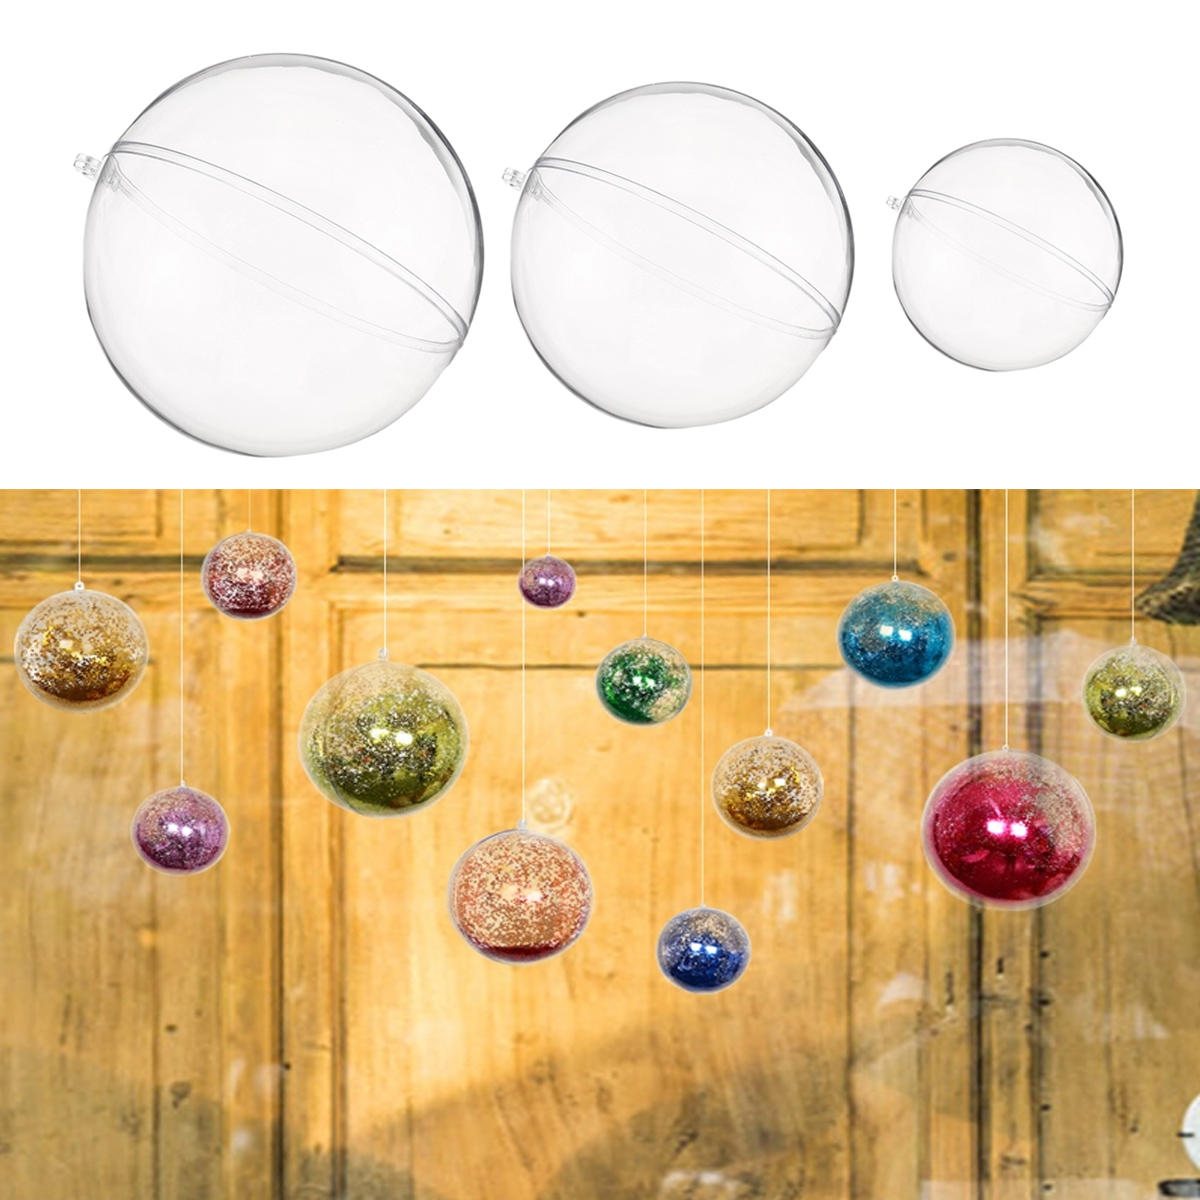 10 Stks 50/70/100 / 120mm Kerst Magic Ball Clear Transparante Boomballen Snuisterij Kerst Ornament H